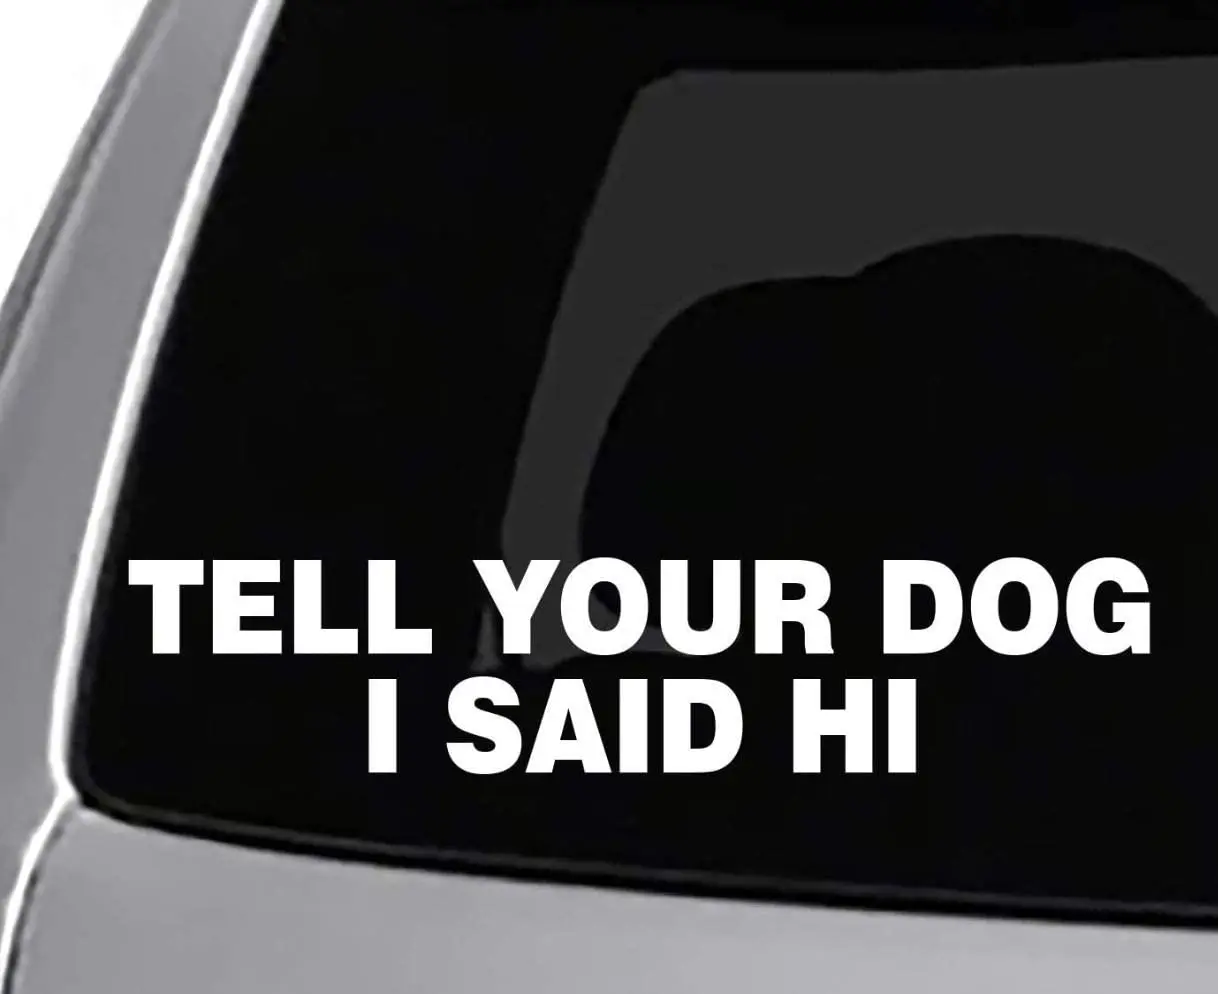 

Tell Your Dog I Said Hi Vinyl Sticker Funny Decal Cars Trucks Walls Windows Laptops White Black Novelty JDM Refit Creative Decor